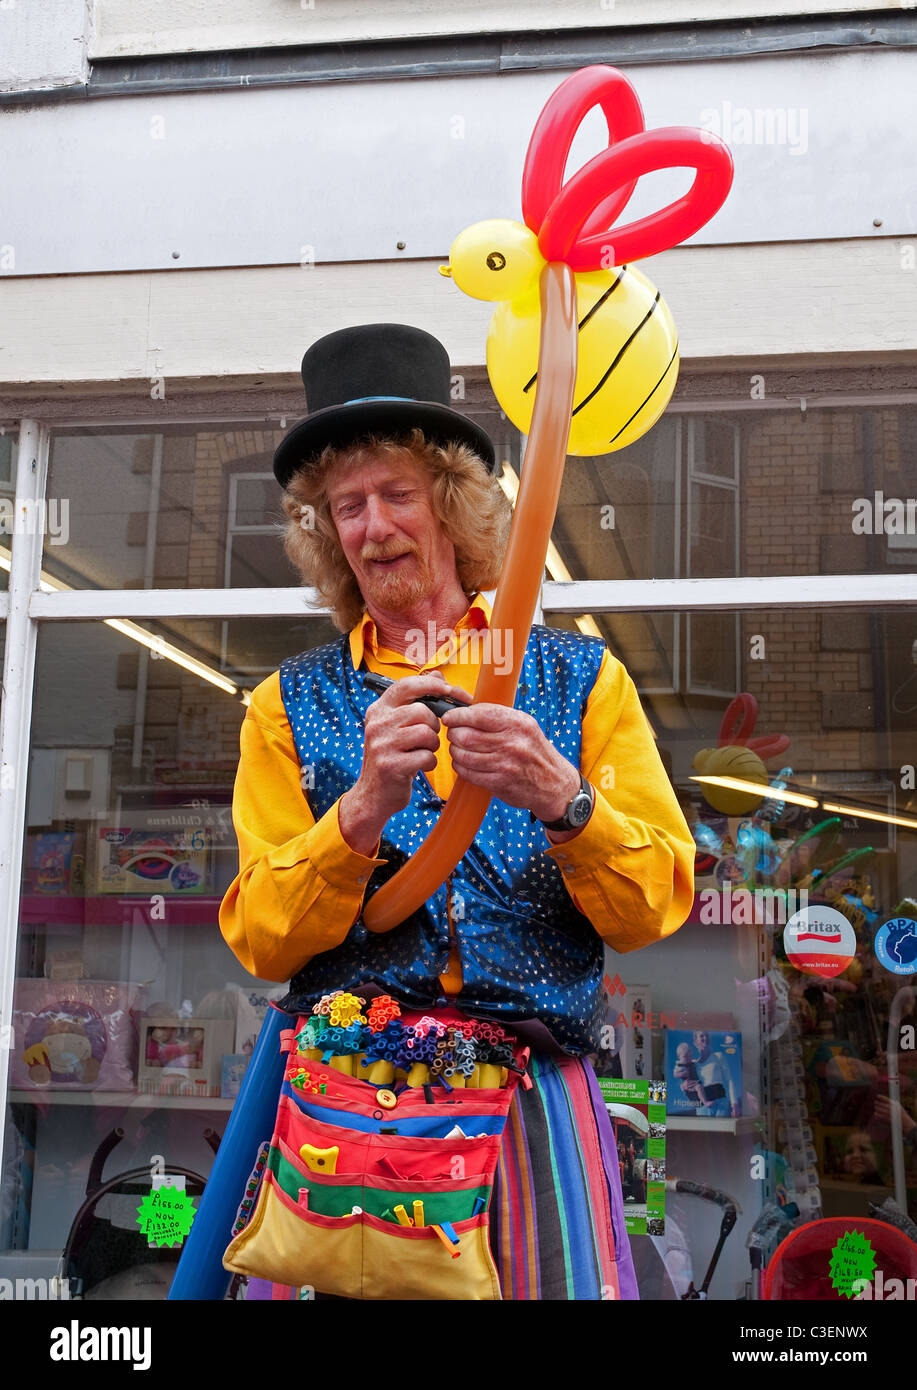 A street artist making balloon models in Camborne, Cornwall, Uk Stock Photo